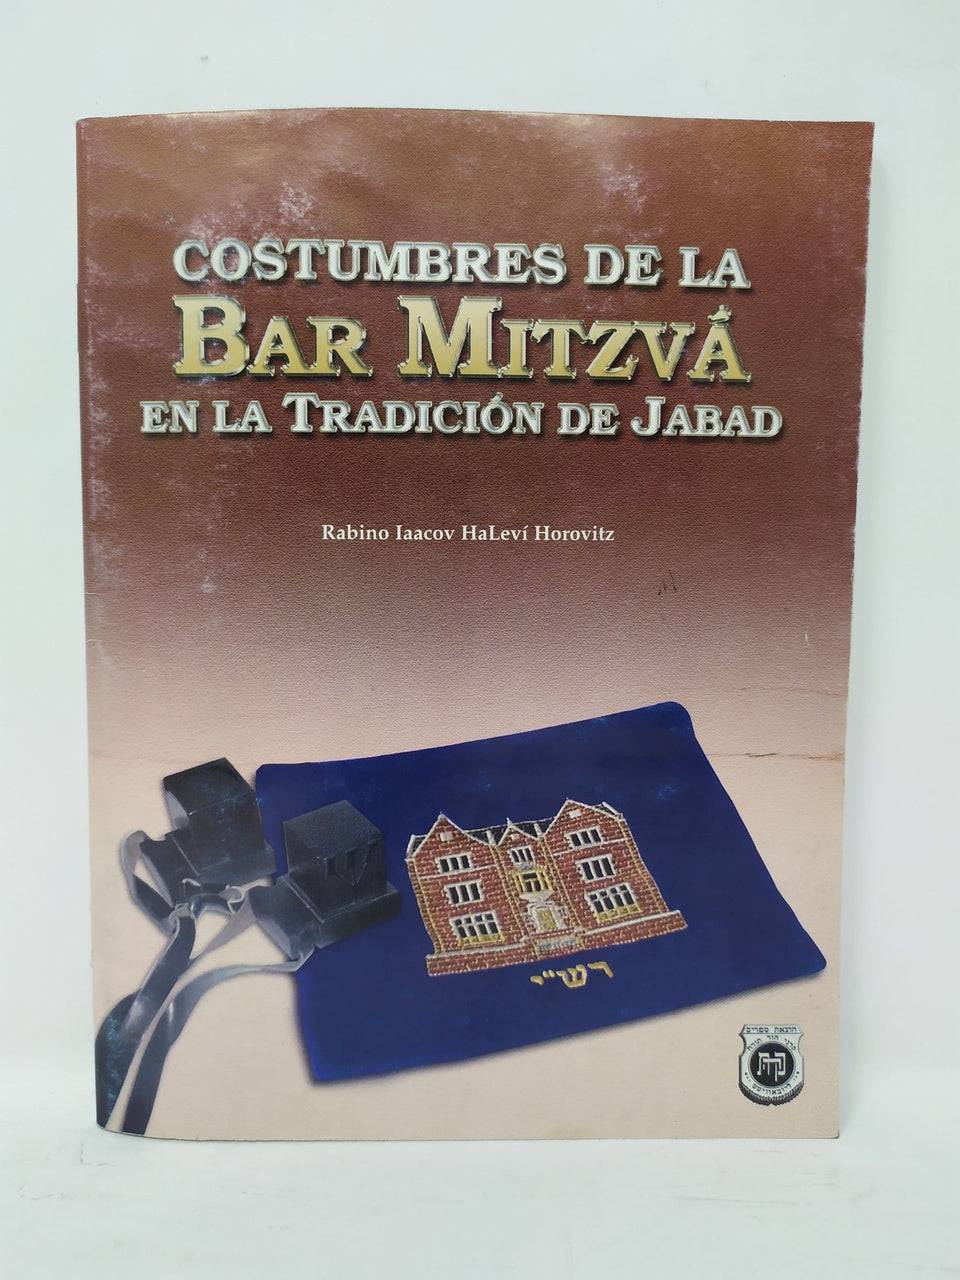 Costumbres de la Bar Mitzva en la tradición de Jabad - Libreria Jerusalem Centro